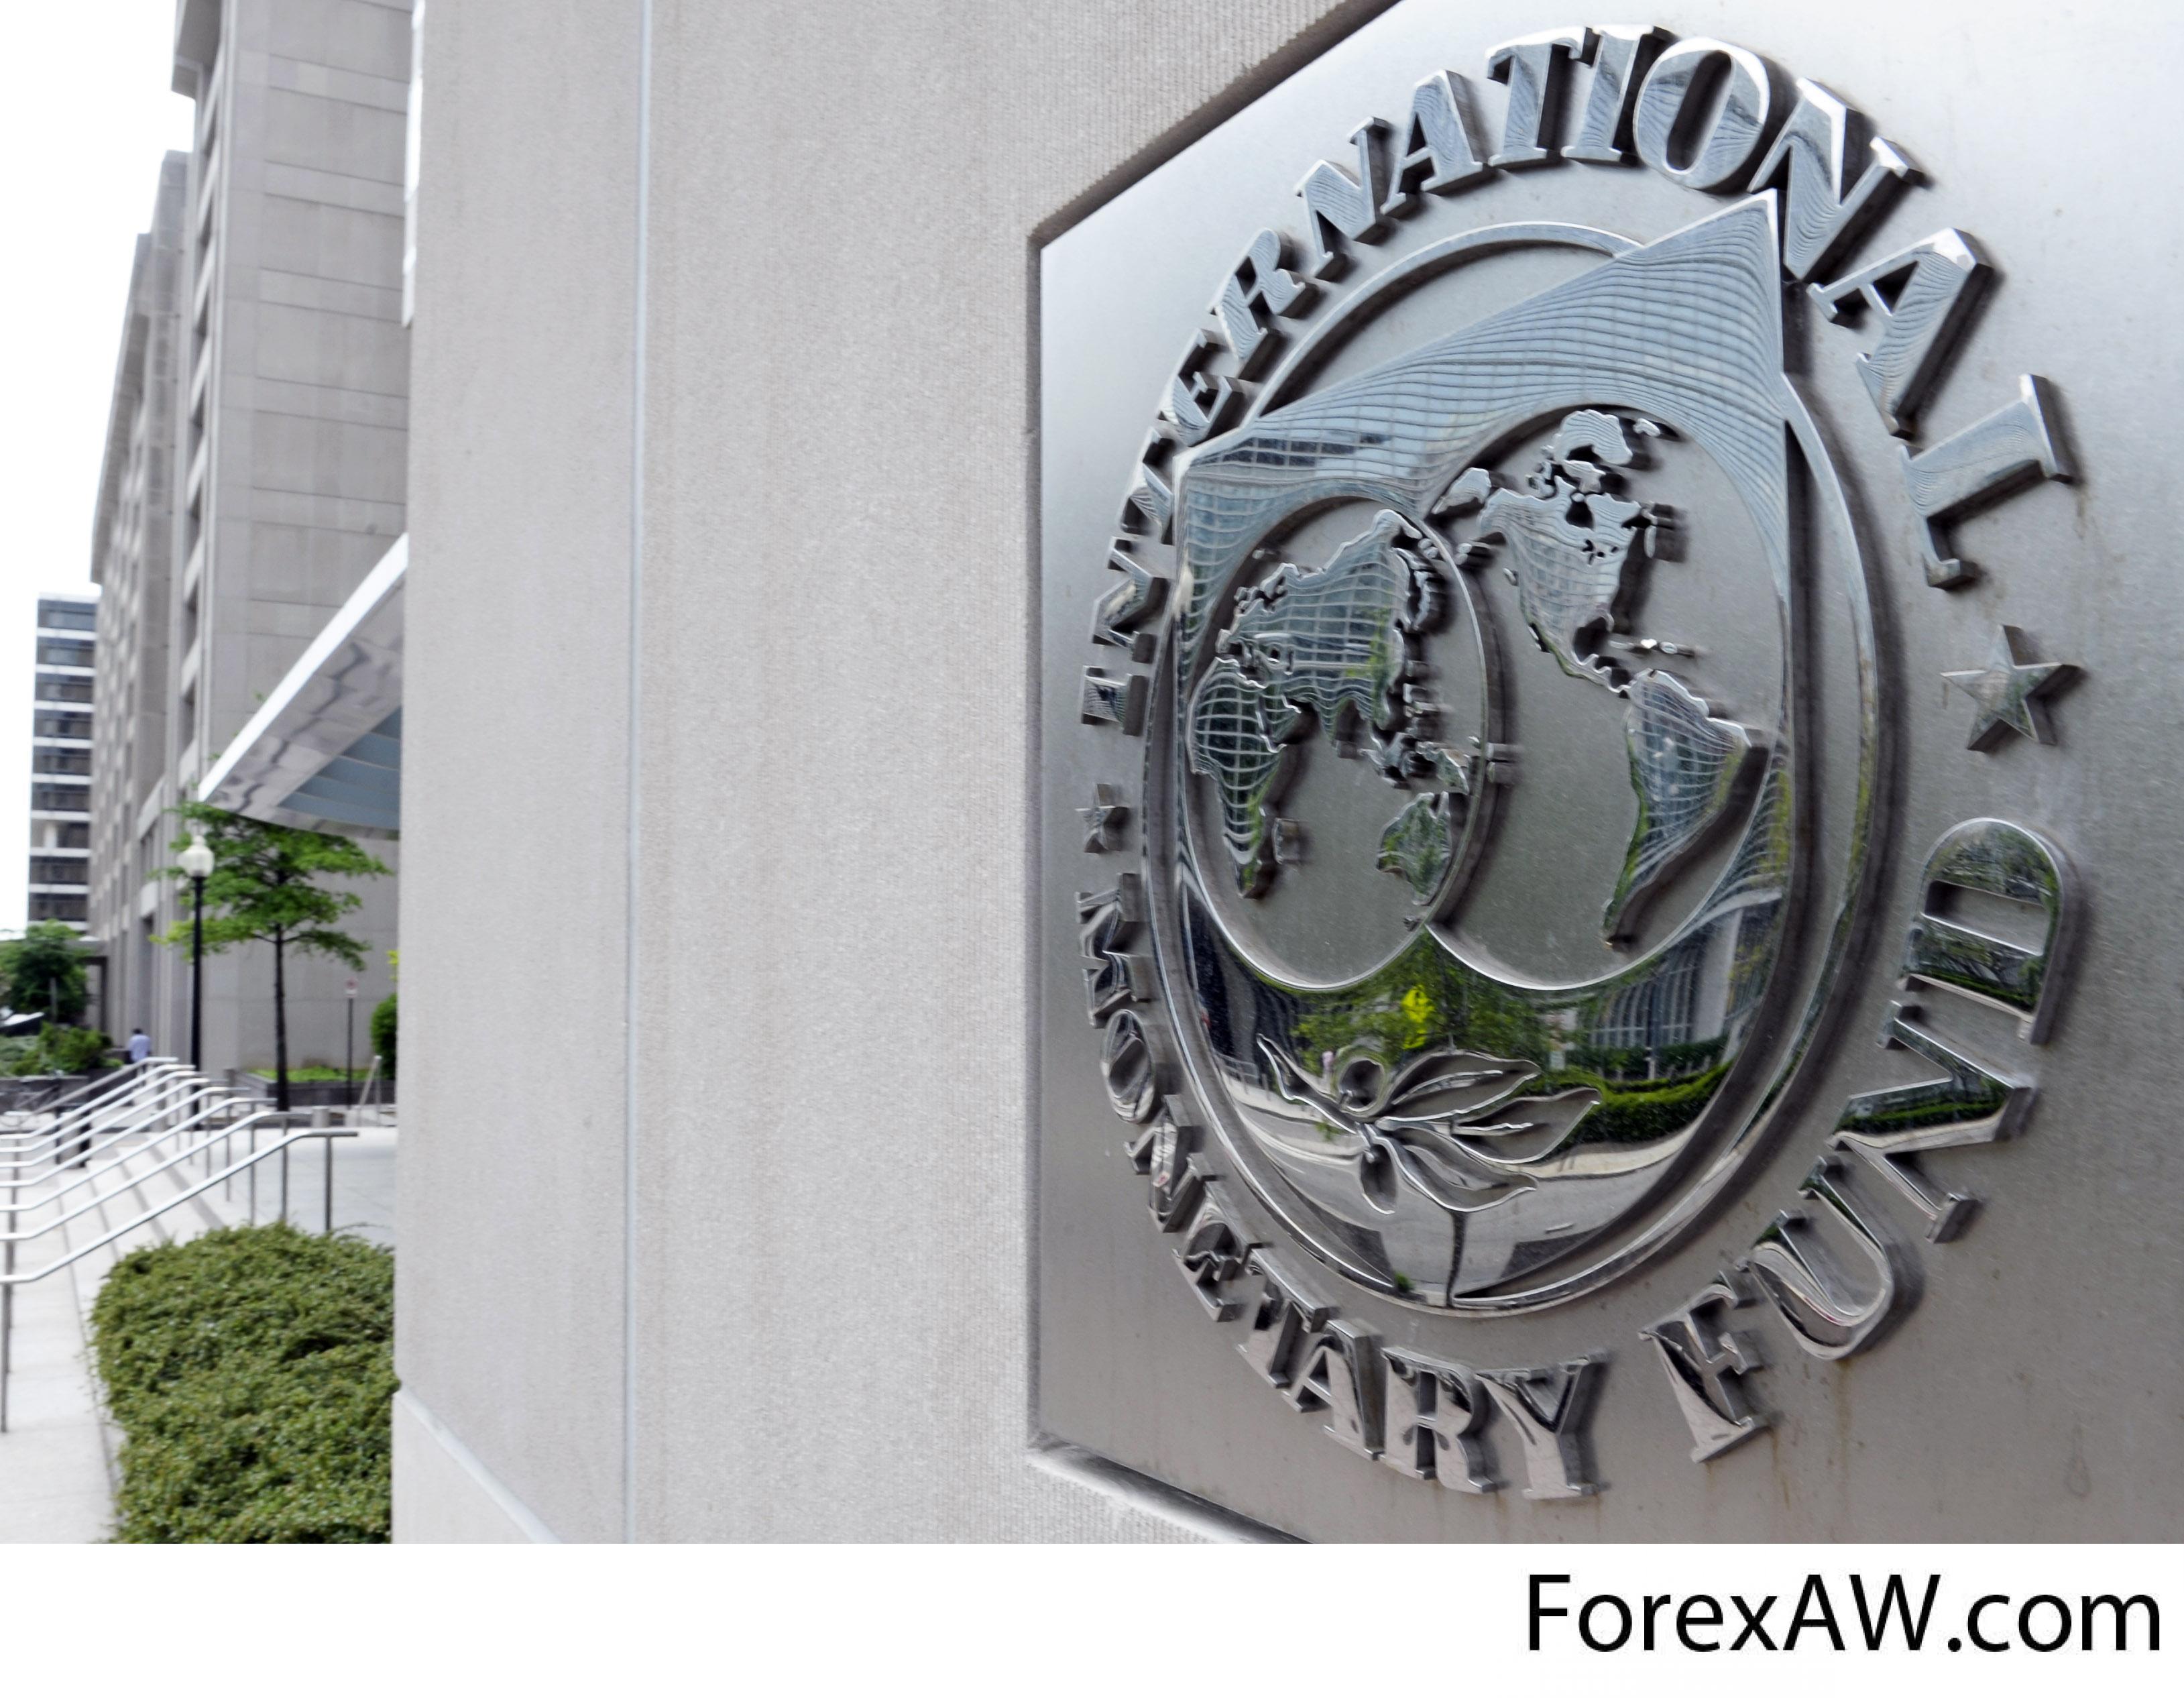 1 мвф. МВФ Вашингтон. International monetary Fund (IMF). МВФ здание. МВФ штаб квартира.